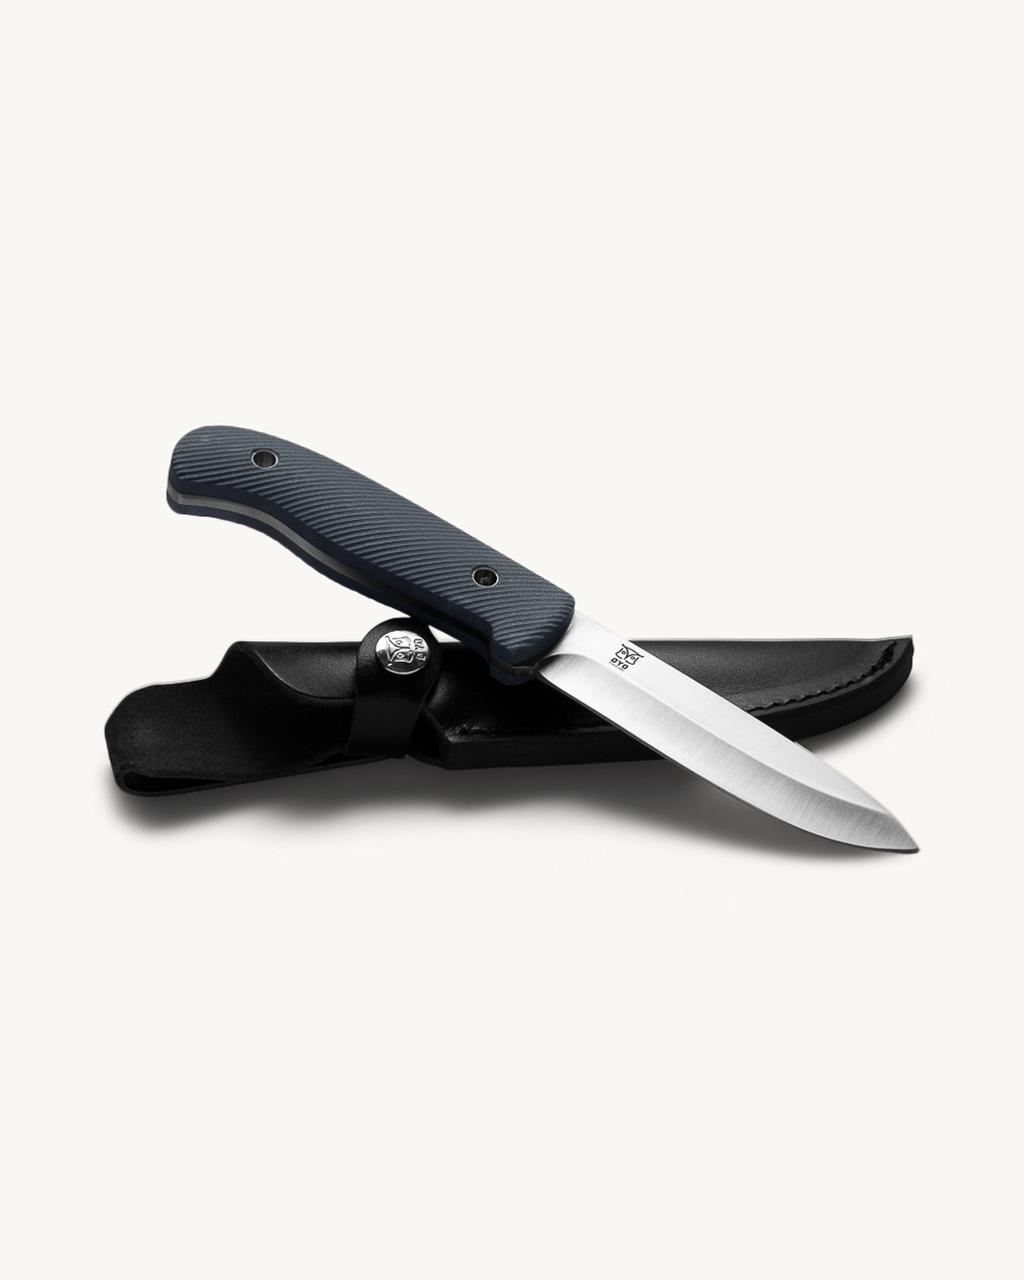 Nordic Hunting knife w/leather sheath